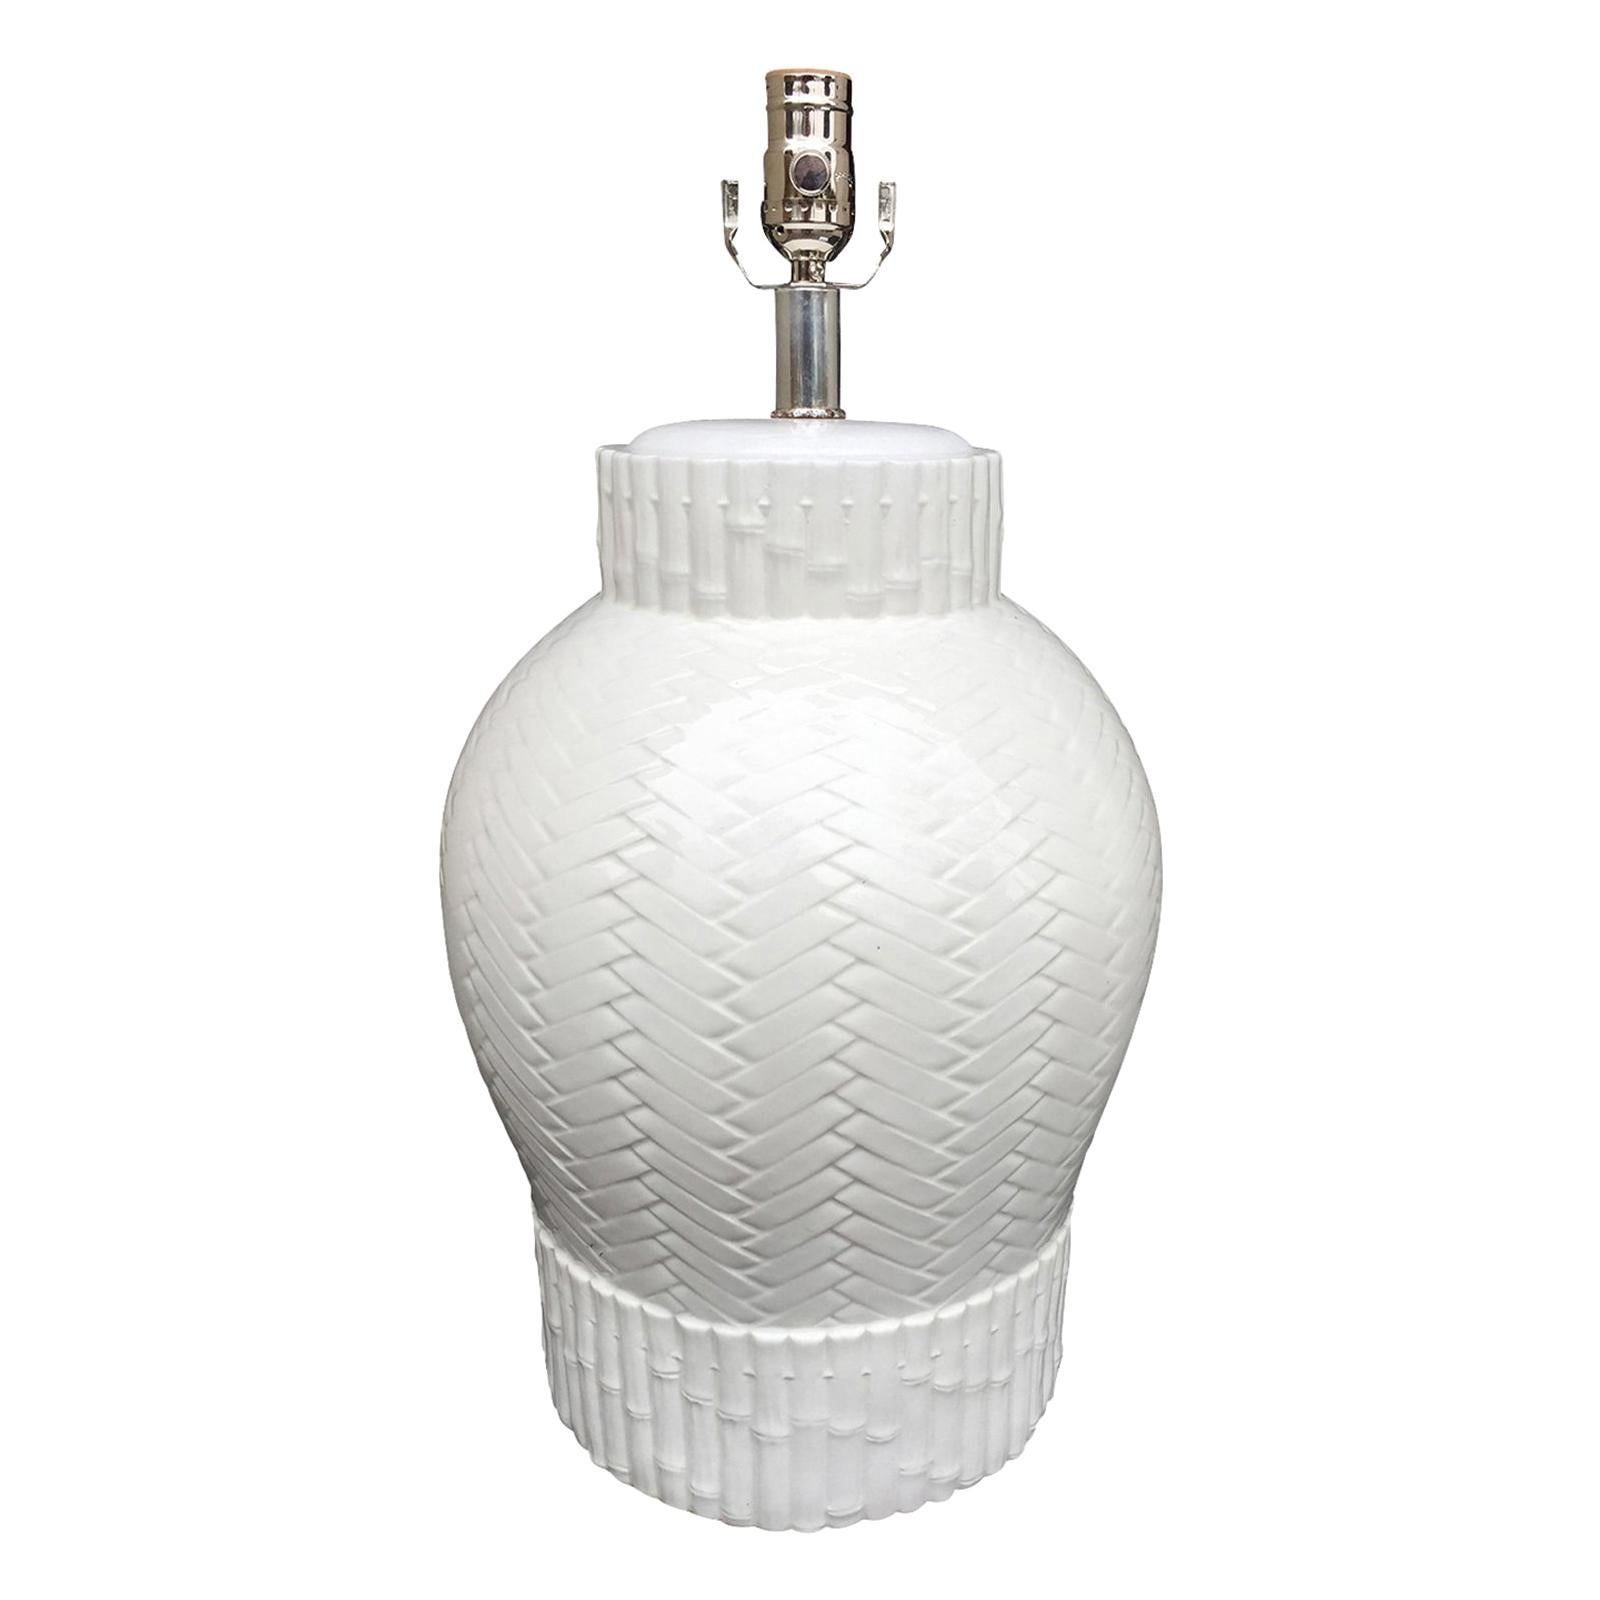 Mid-20th Century Italian White Faux Bamboo Porcelain Lamp